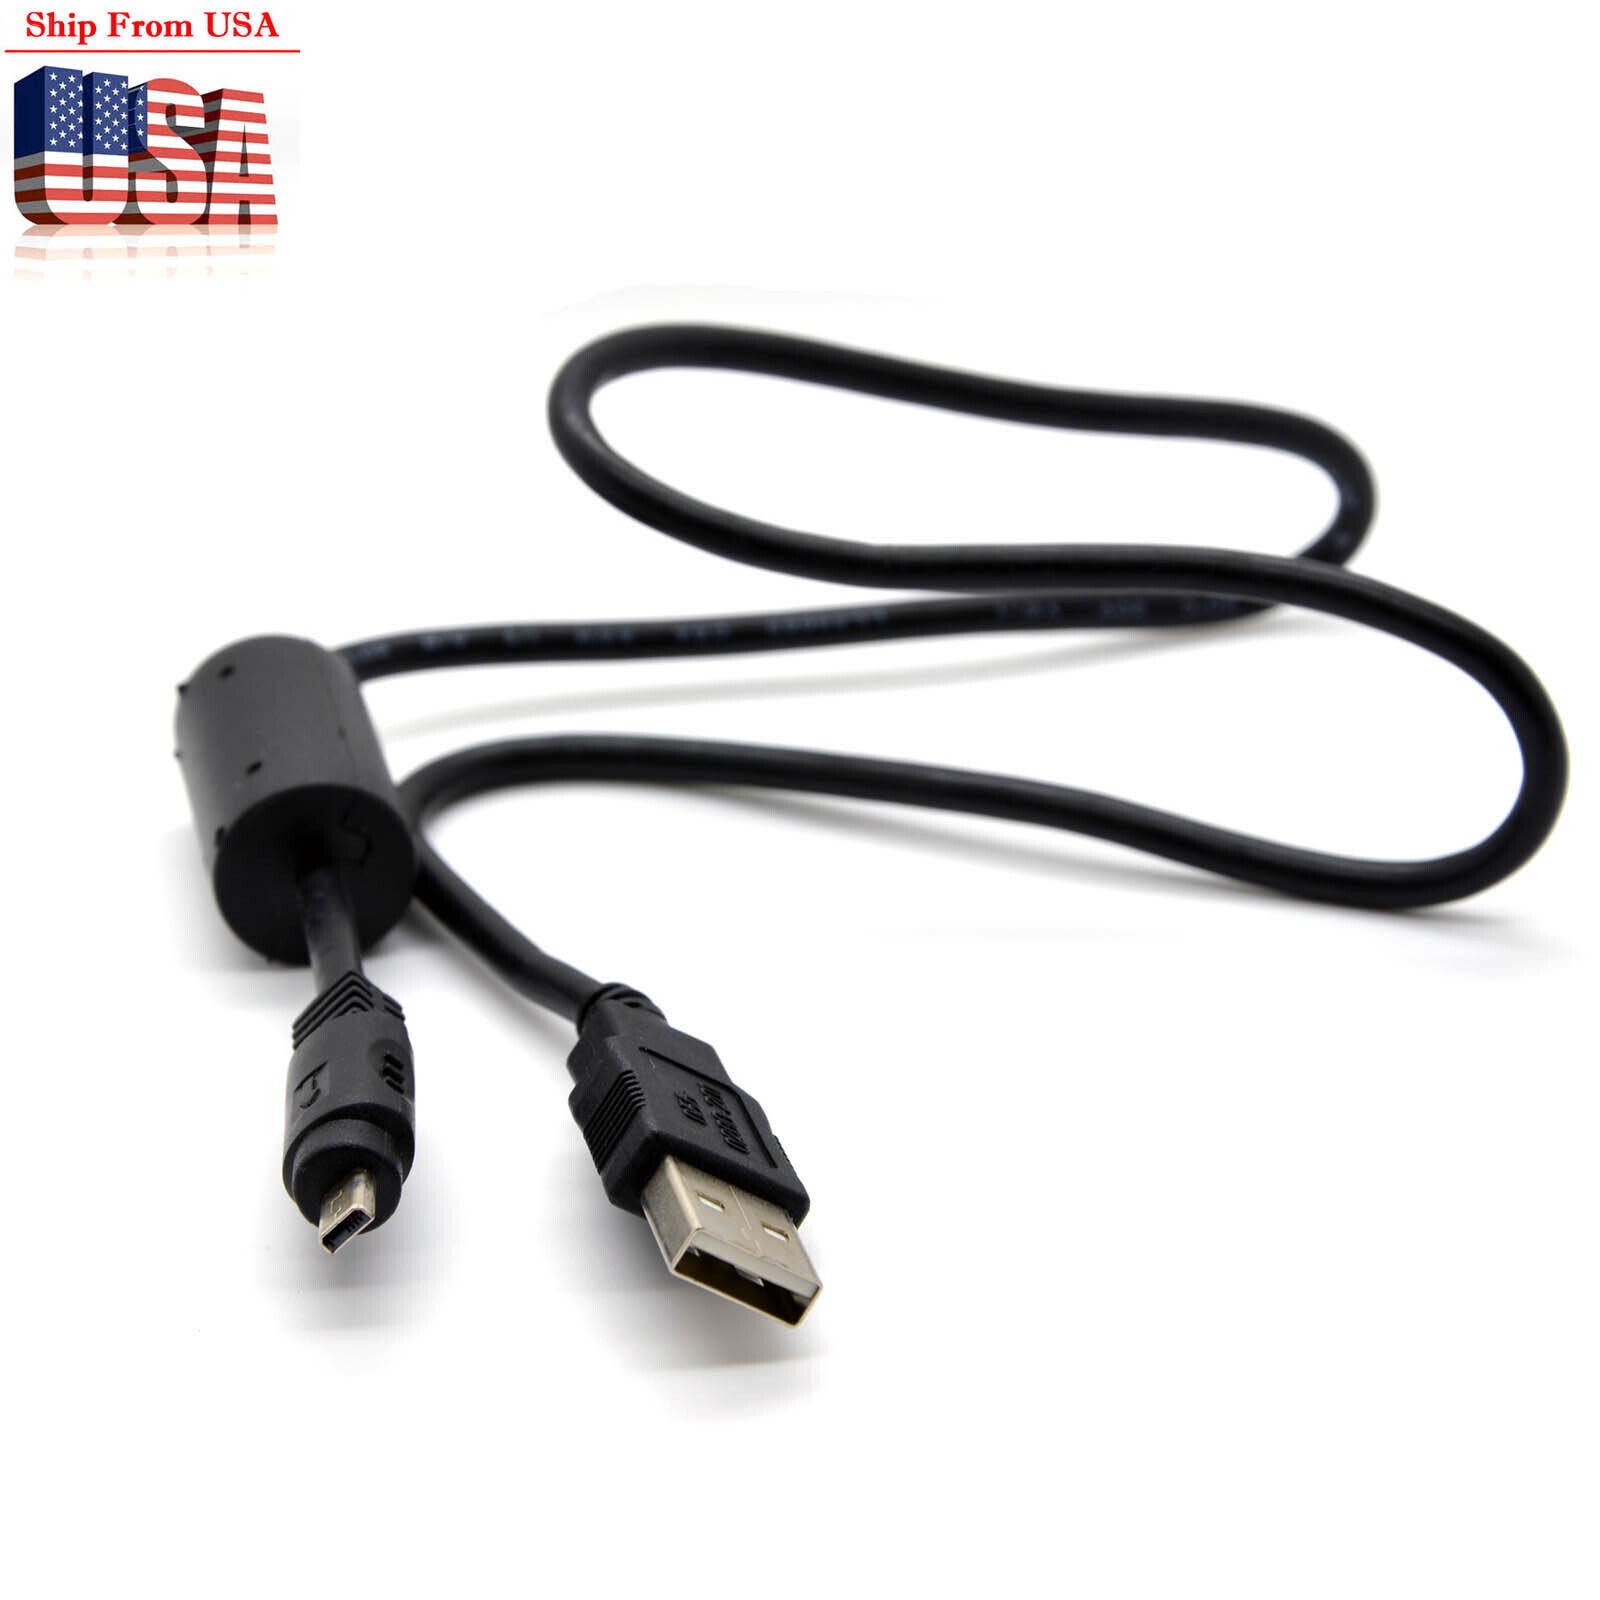 Sync Data USB Cable Cord Lead Panasonic Lumix DMC-FZ62 DMC-FZ70 DMC-FZ72 USA | eBay